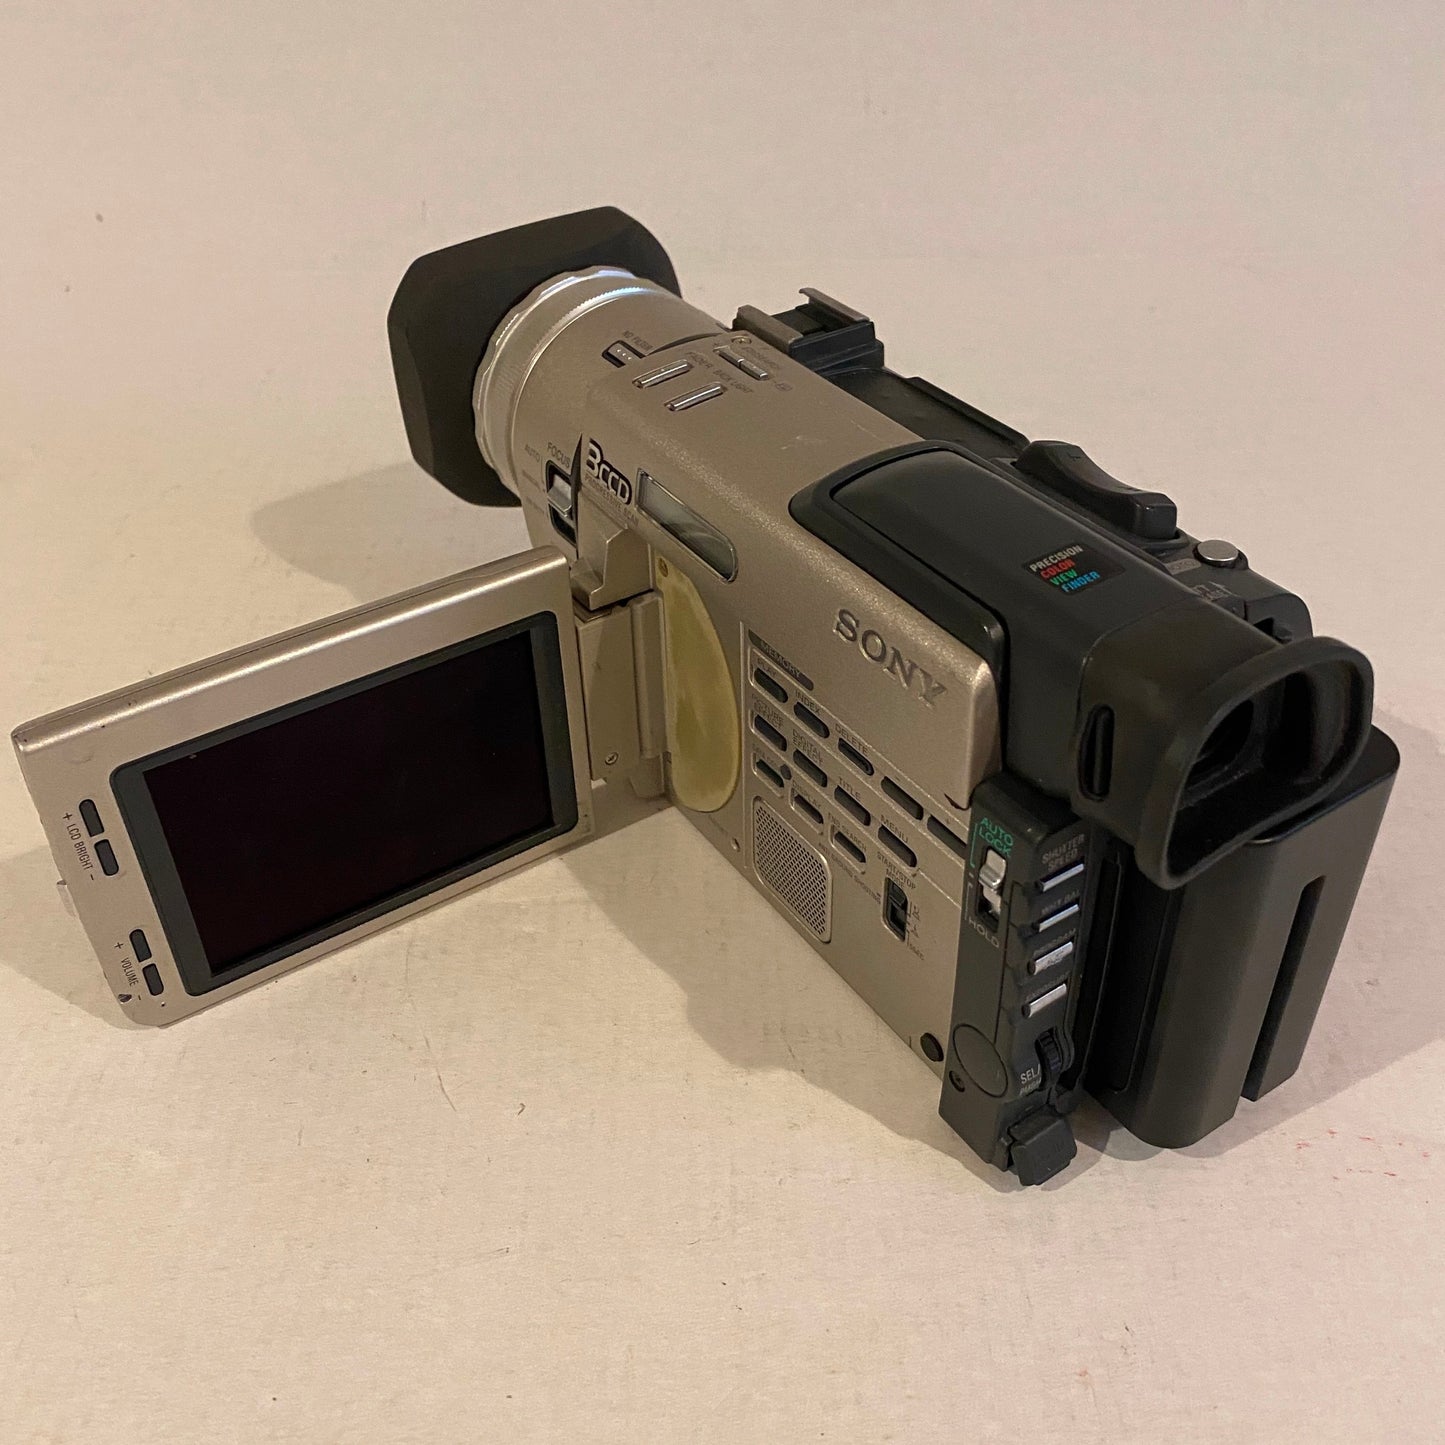 Sony Handycam Mini DV Digital Video Camera - DCR-TRV900